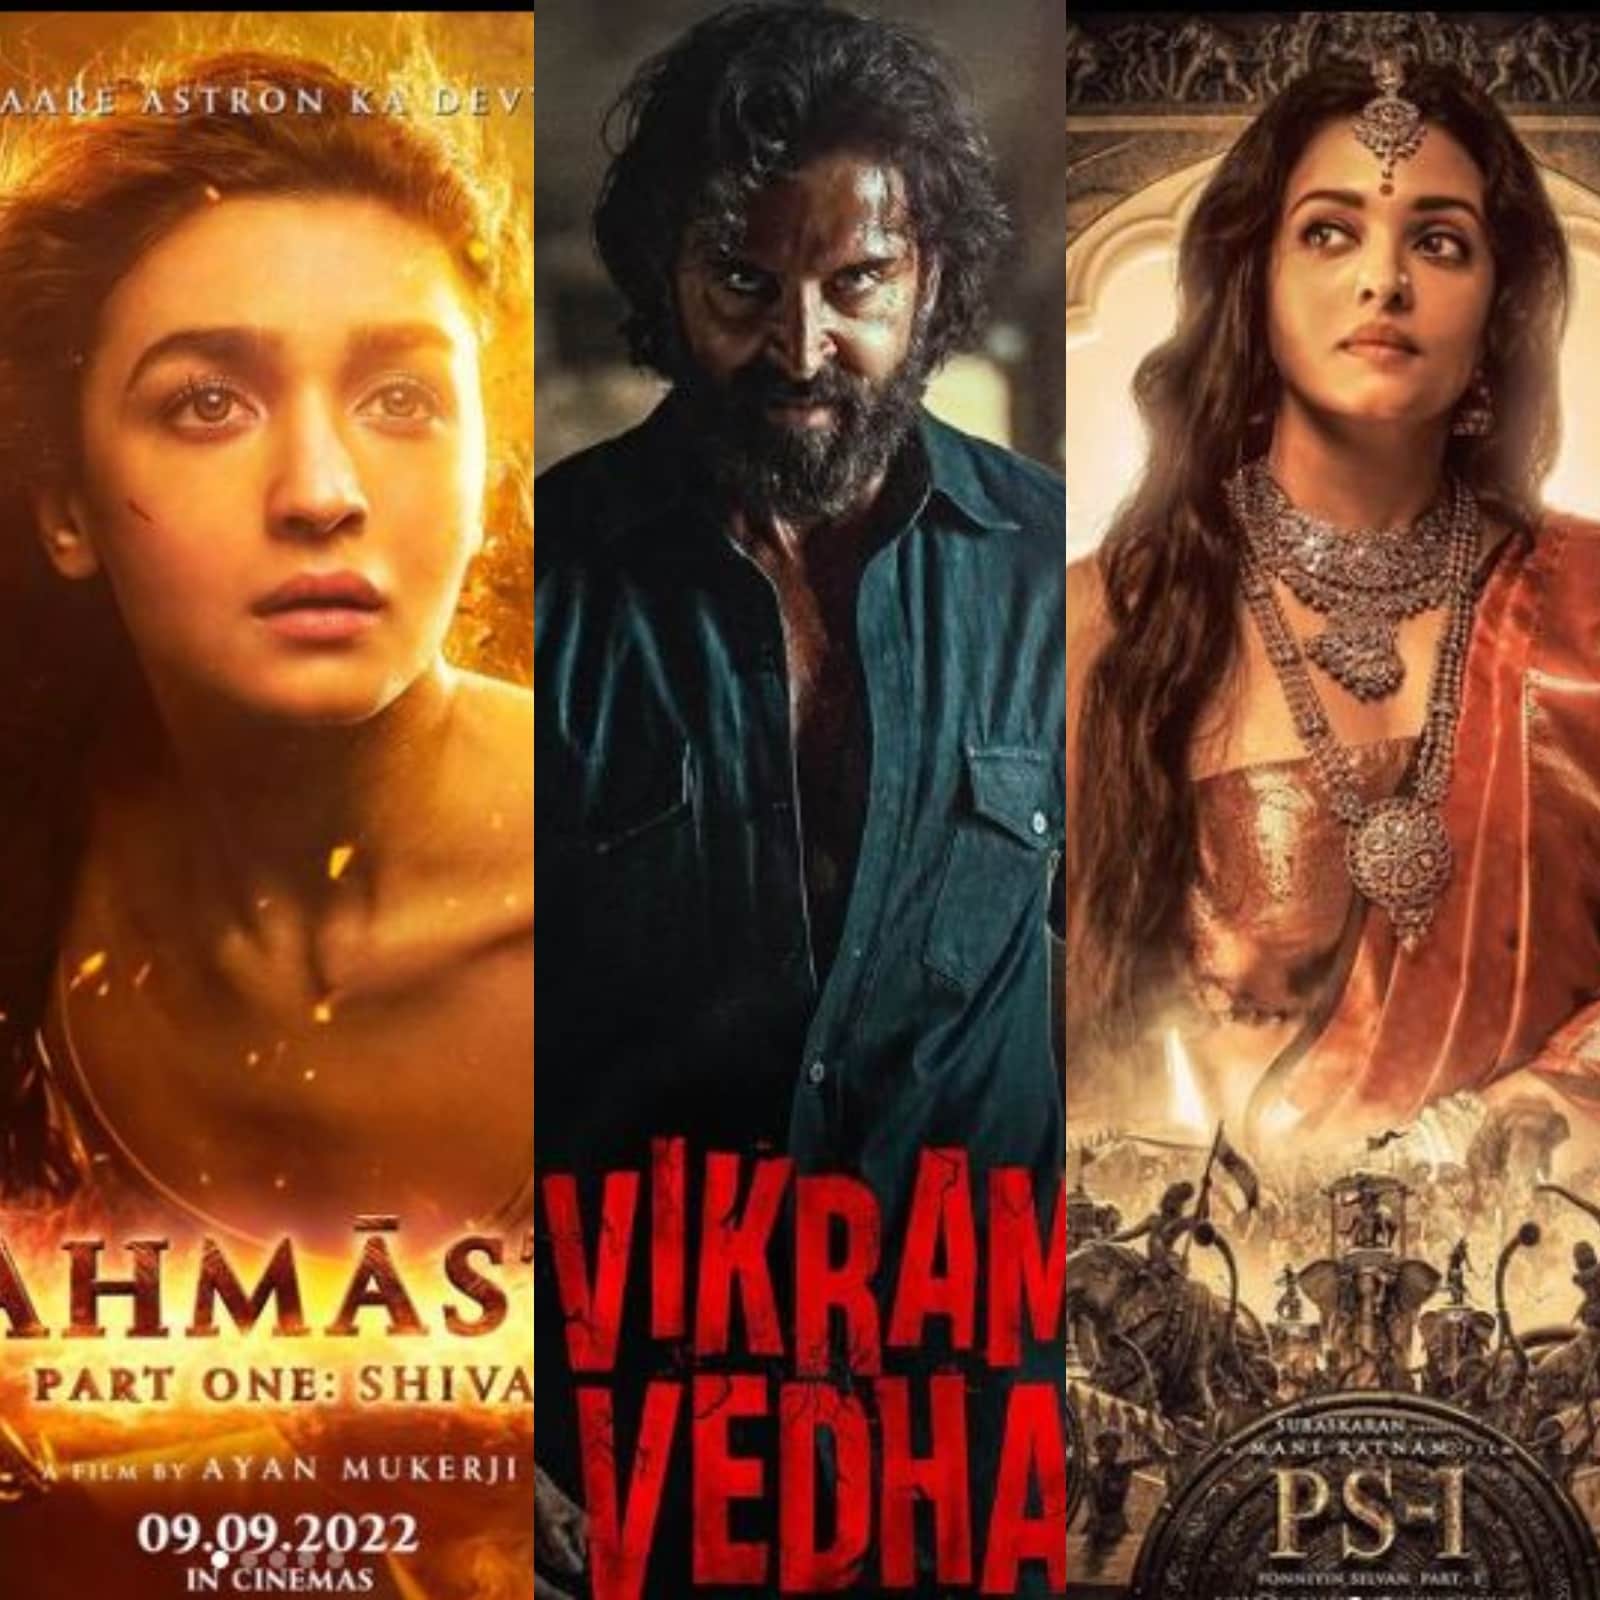 Brahmashtra Vs Ponniyin Selvan-1 Vs Vikram Vedha Who will Win at the Box Office?